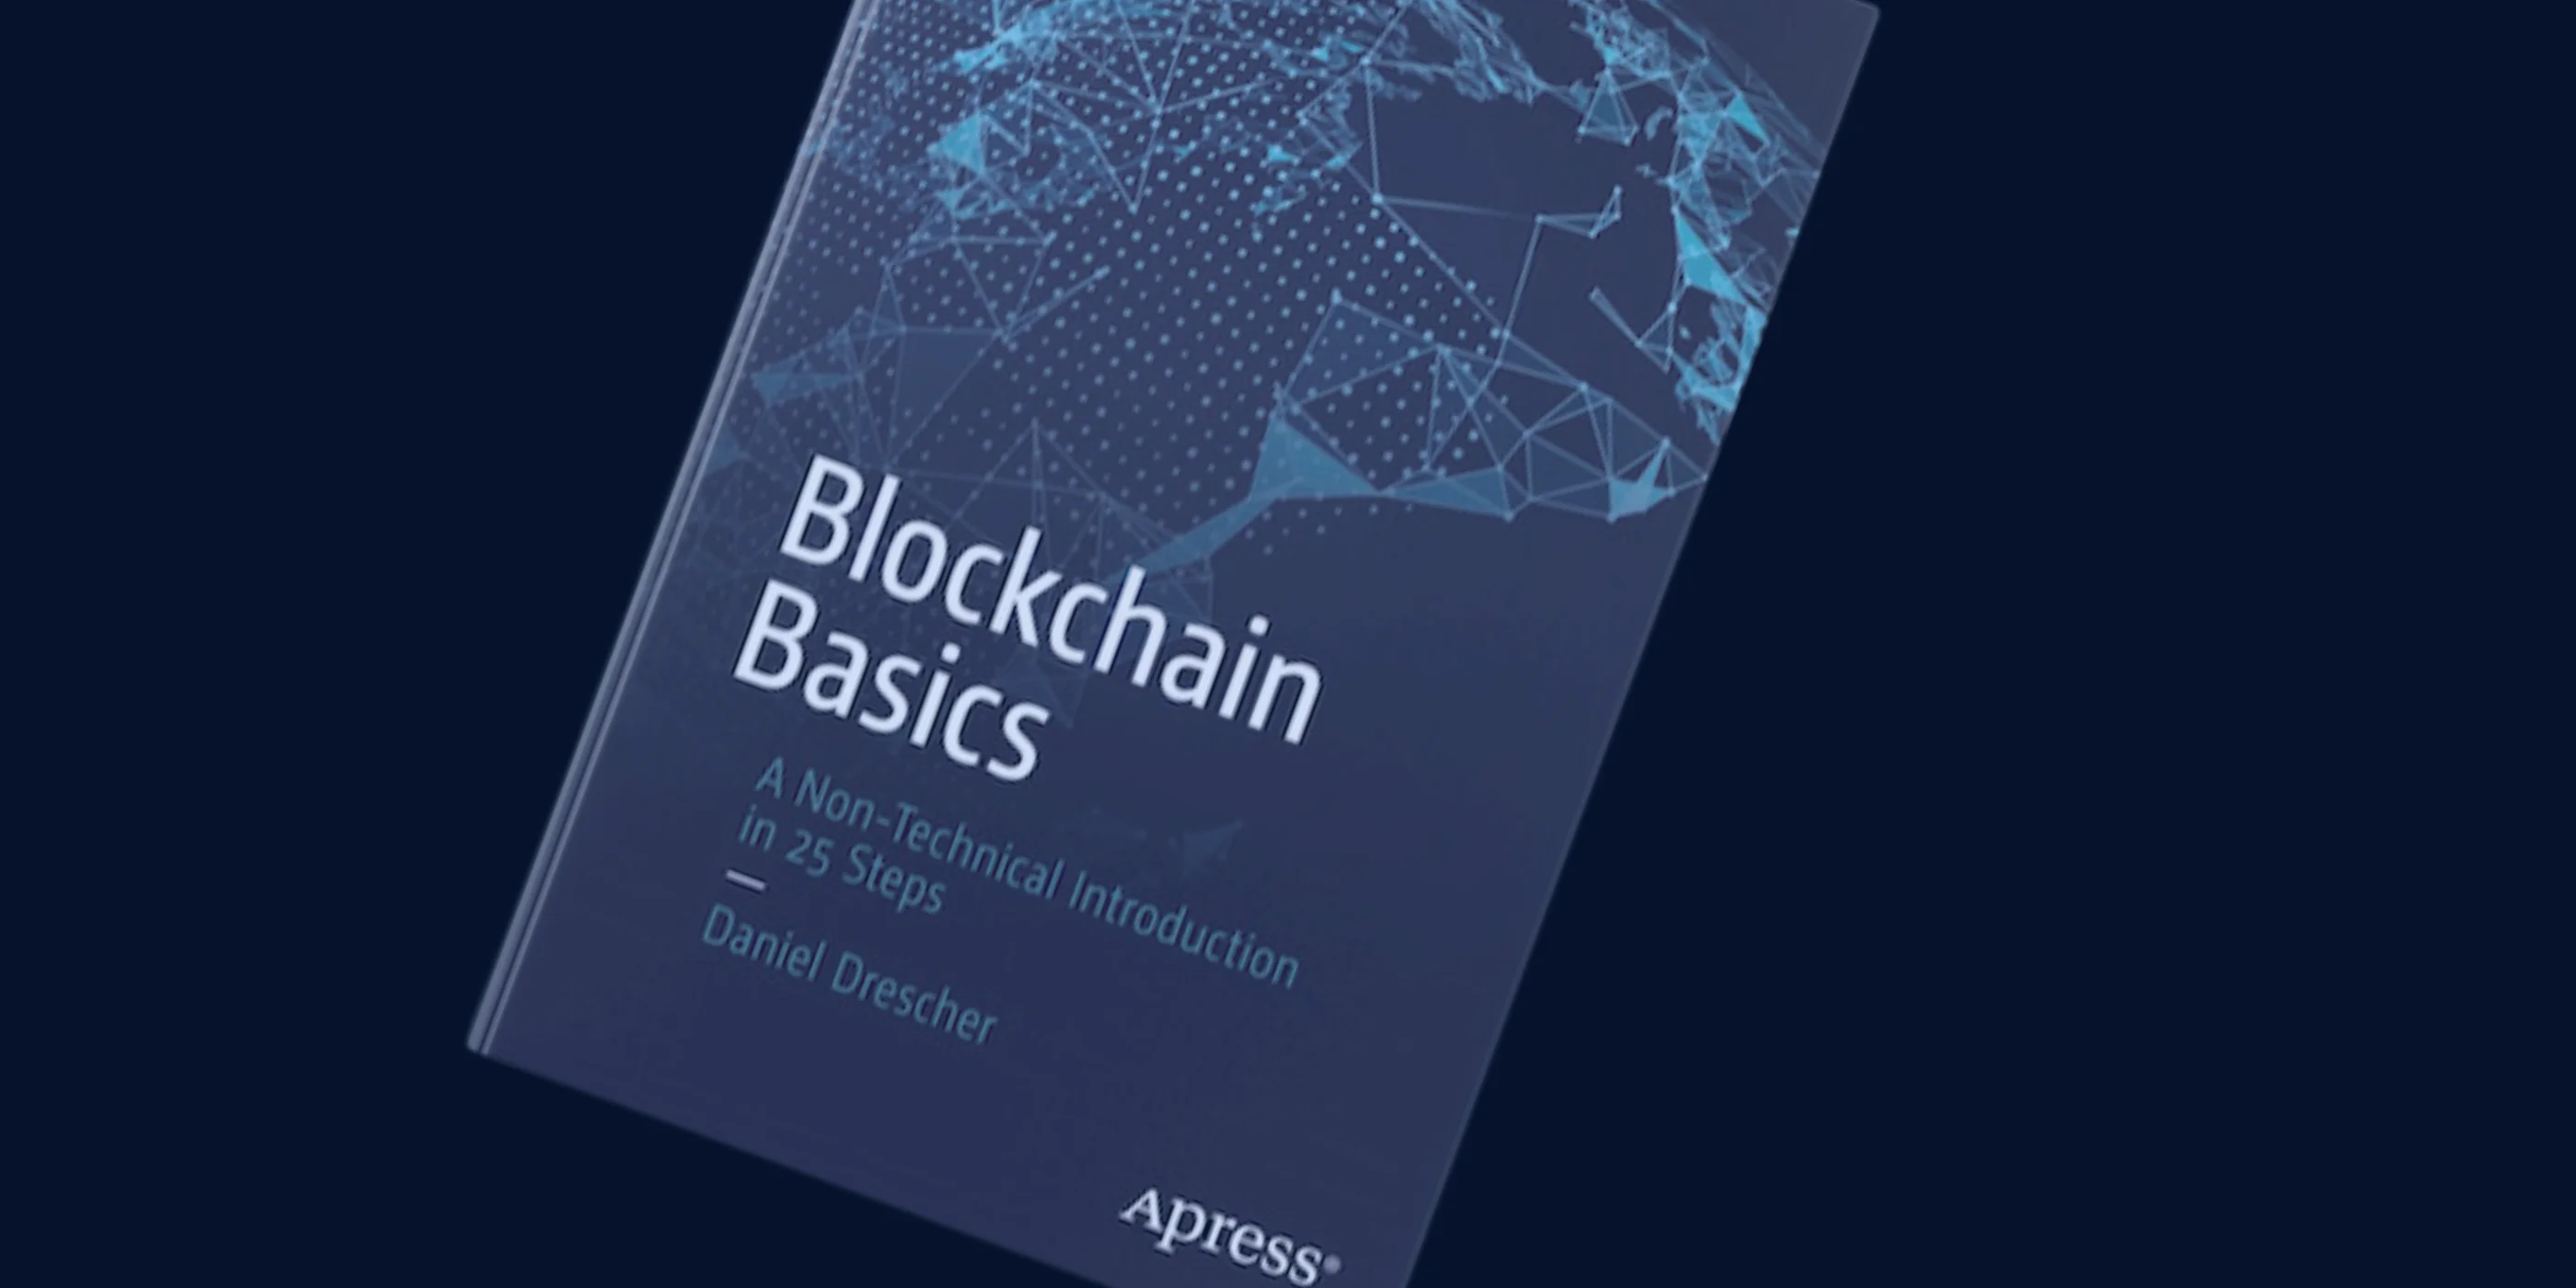 blockchain basics book cover